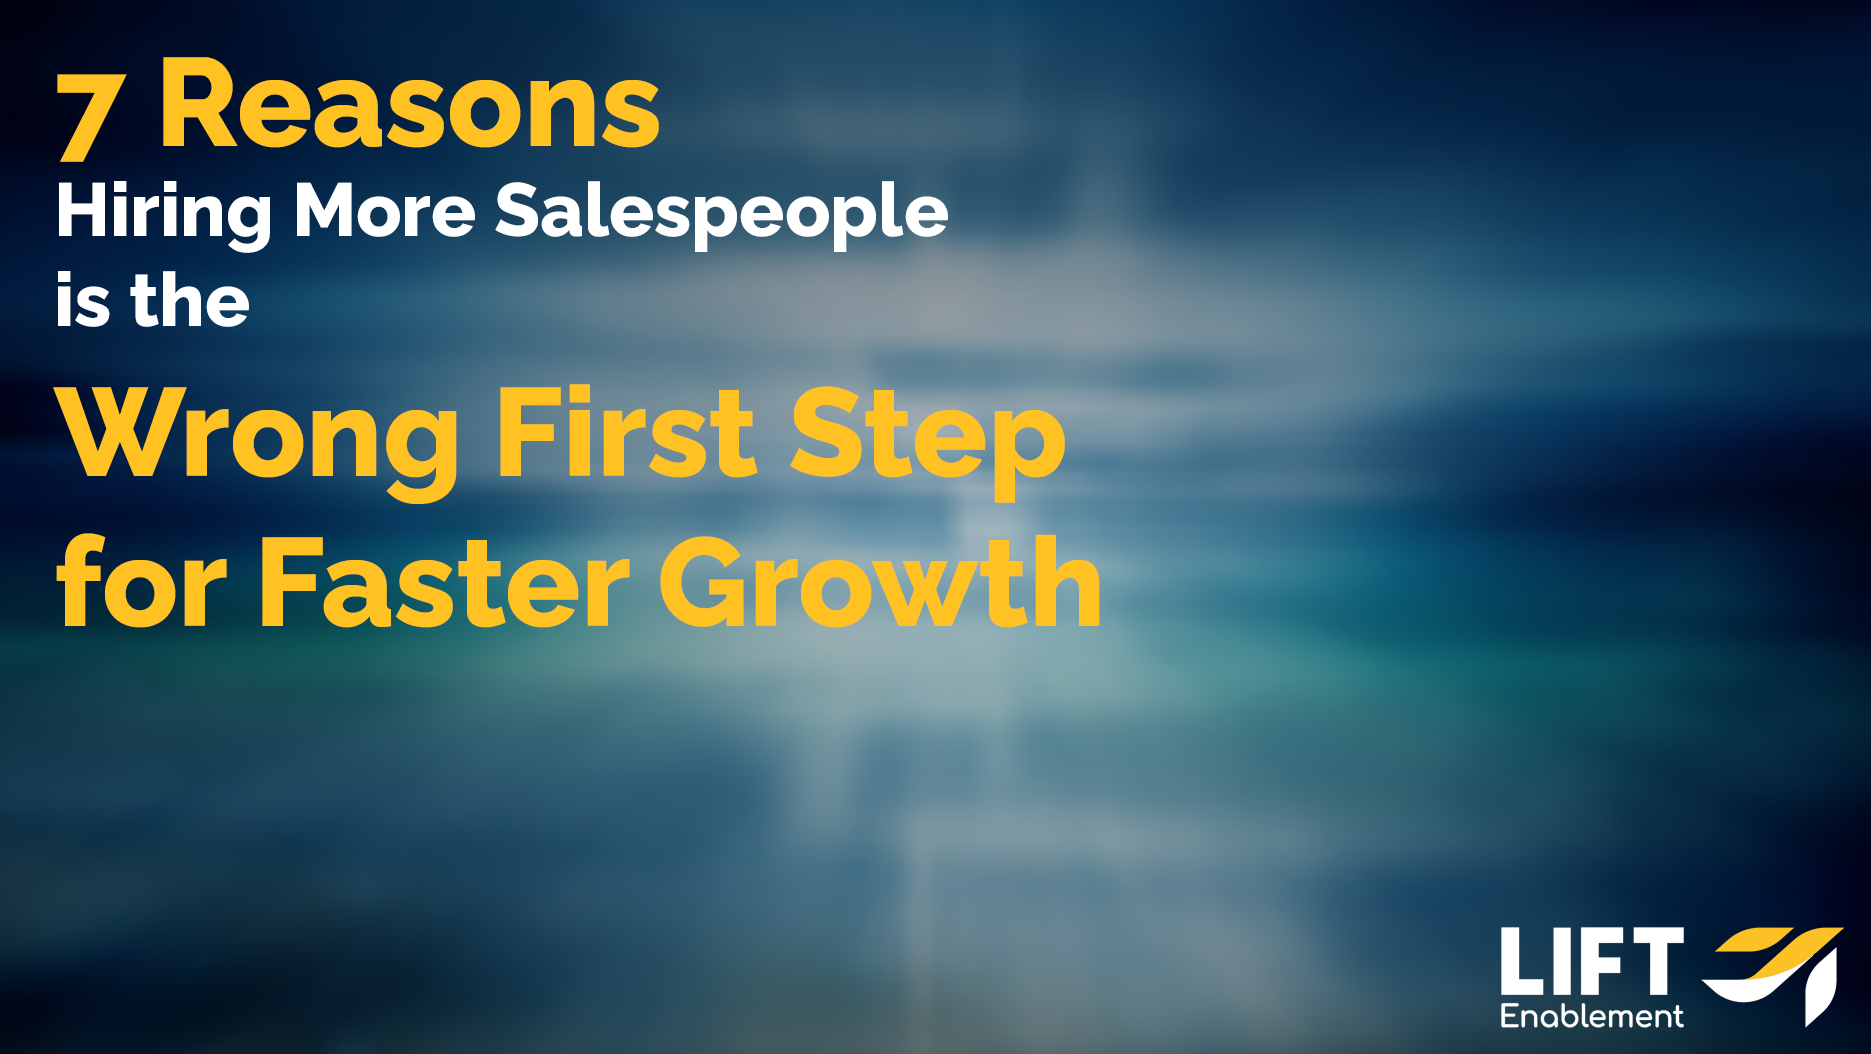 7-reasons-hiring-more-salespeople-cta